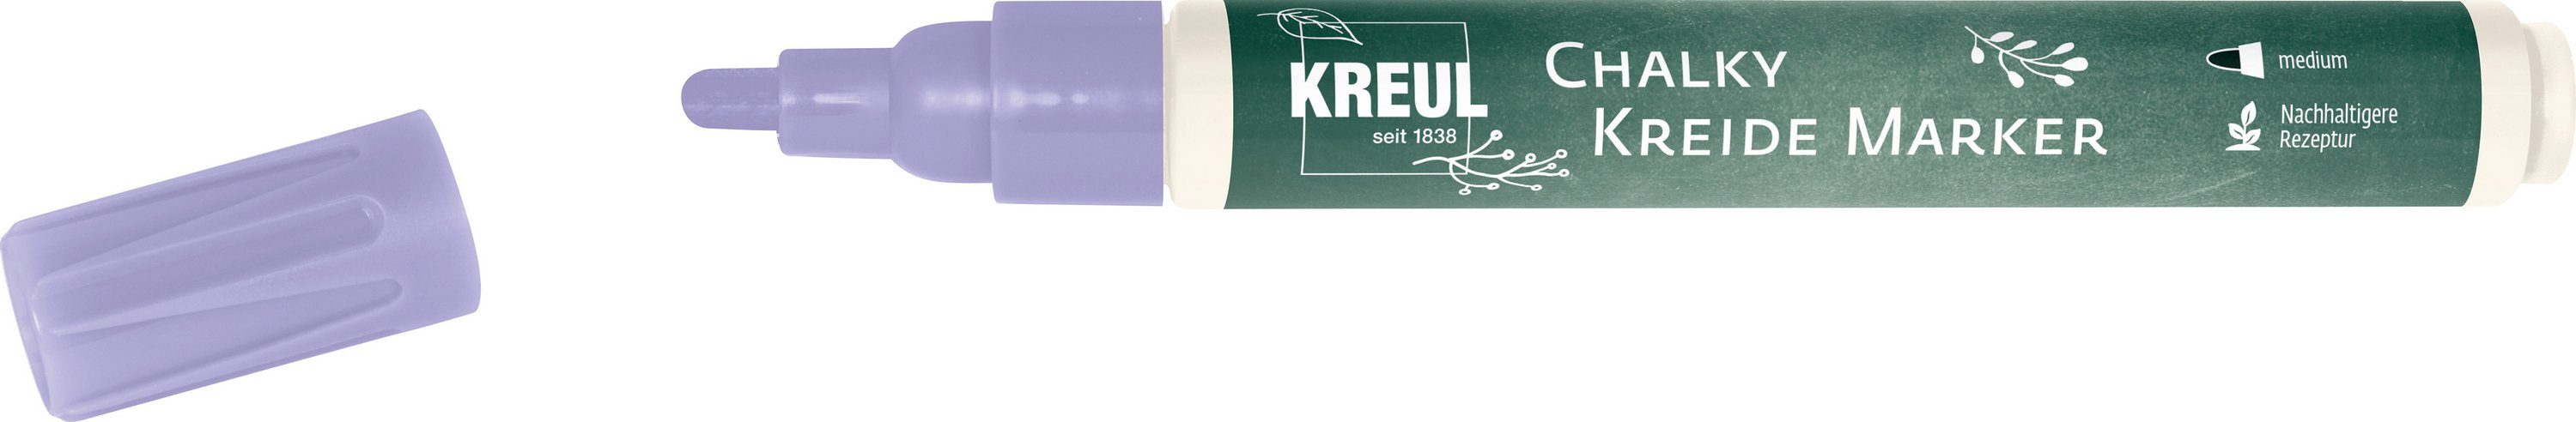 Kreul Kreidemarker Chalky, 2-3mm Strichstärke Dark Lavender | Marker